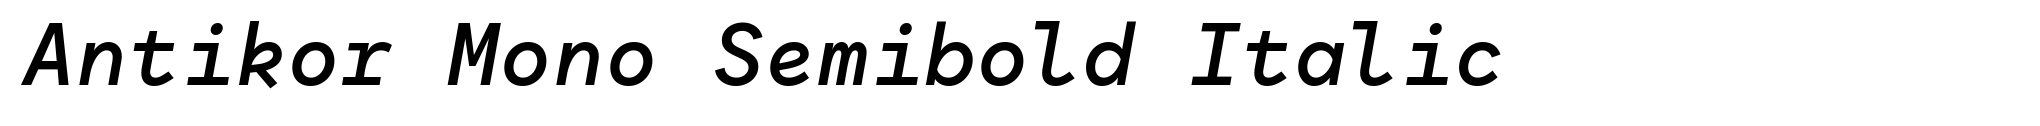 Antikor Mono Semibold Italic image